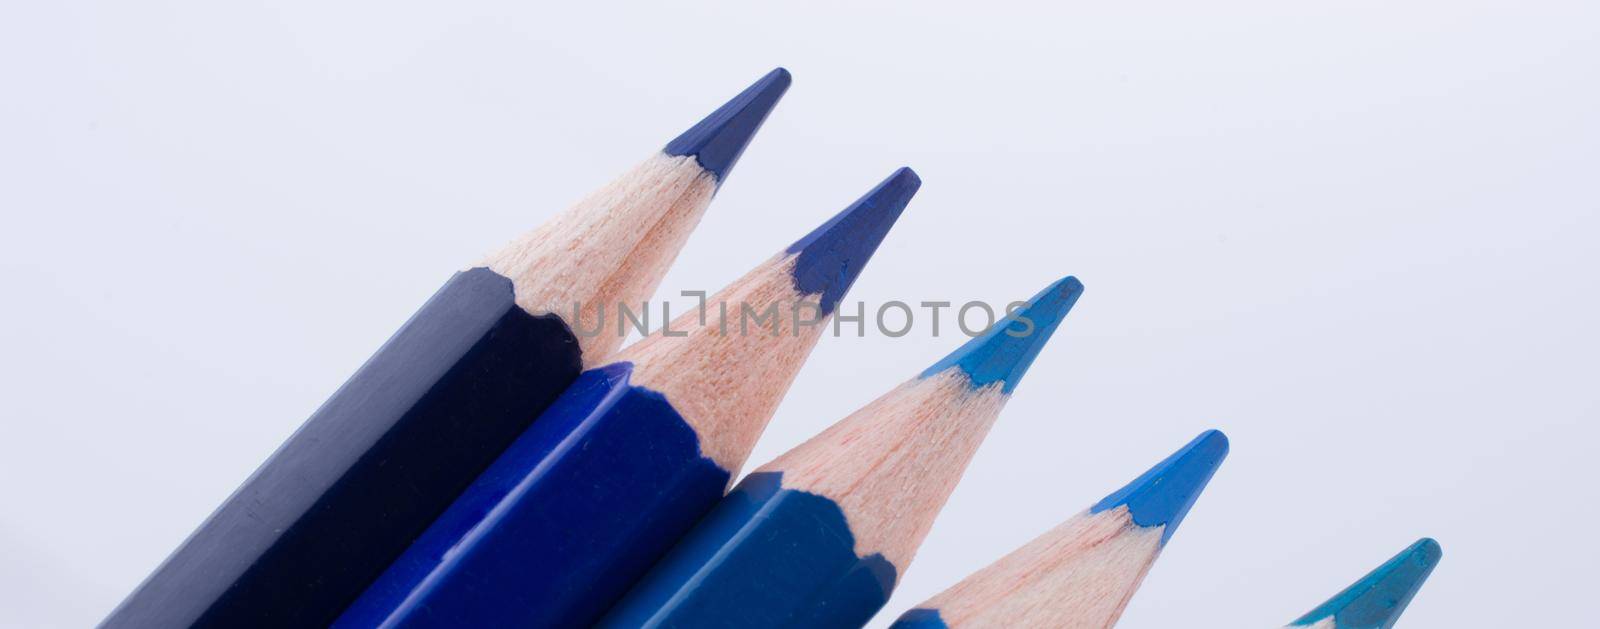 Color Pencils of various tones by berkay